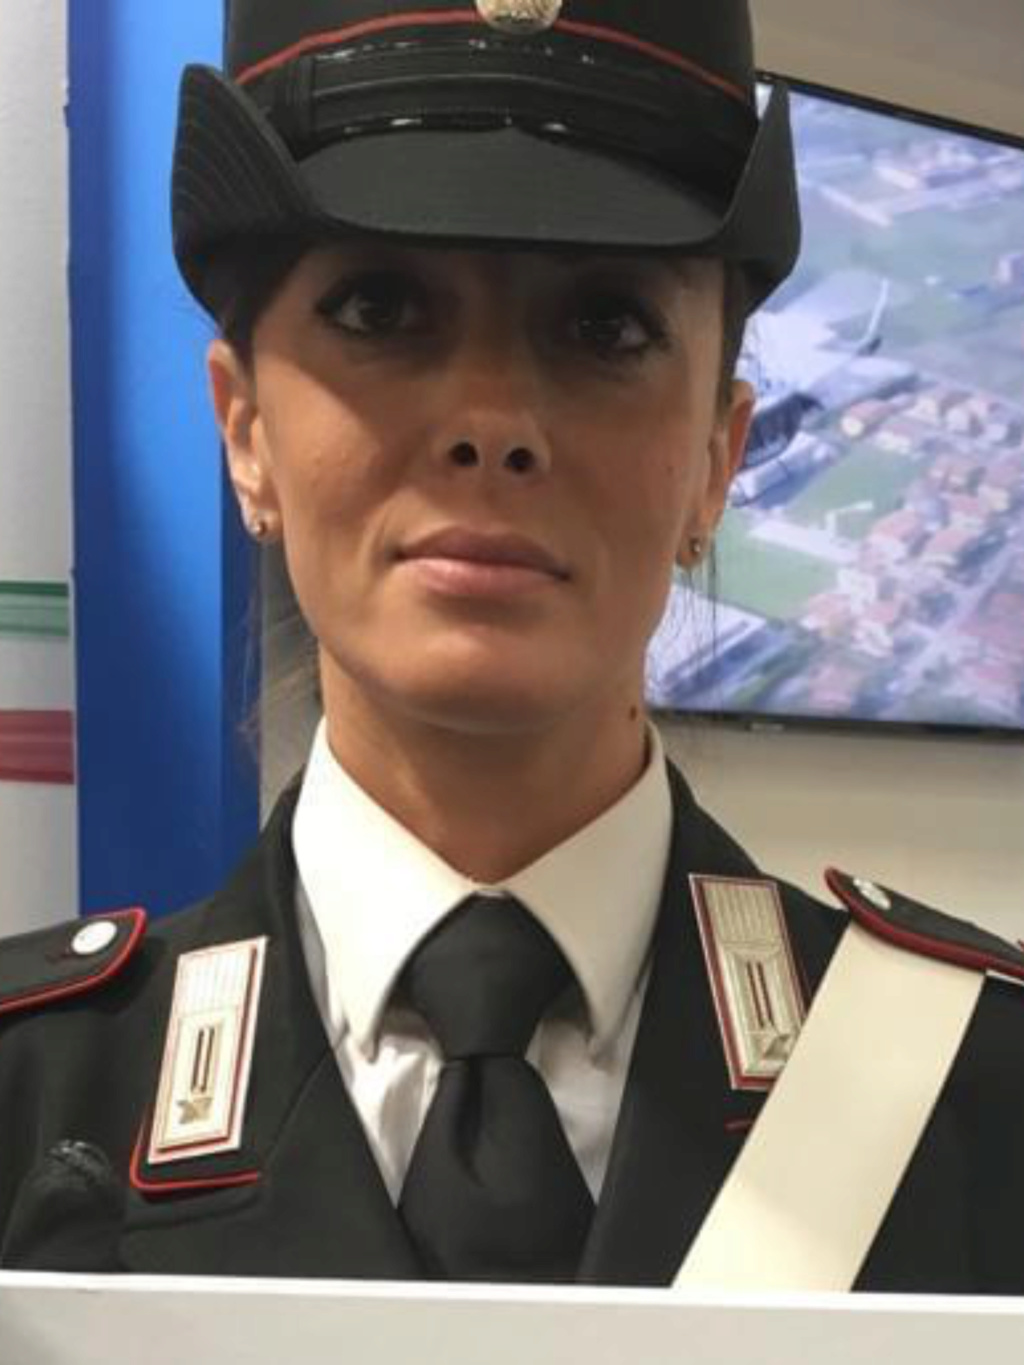 Italian Police Uniform 811